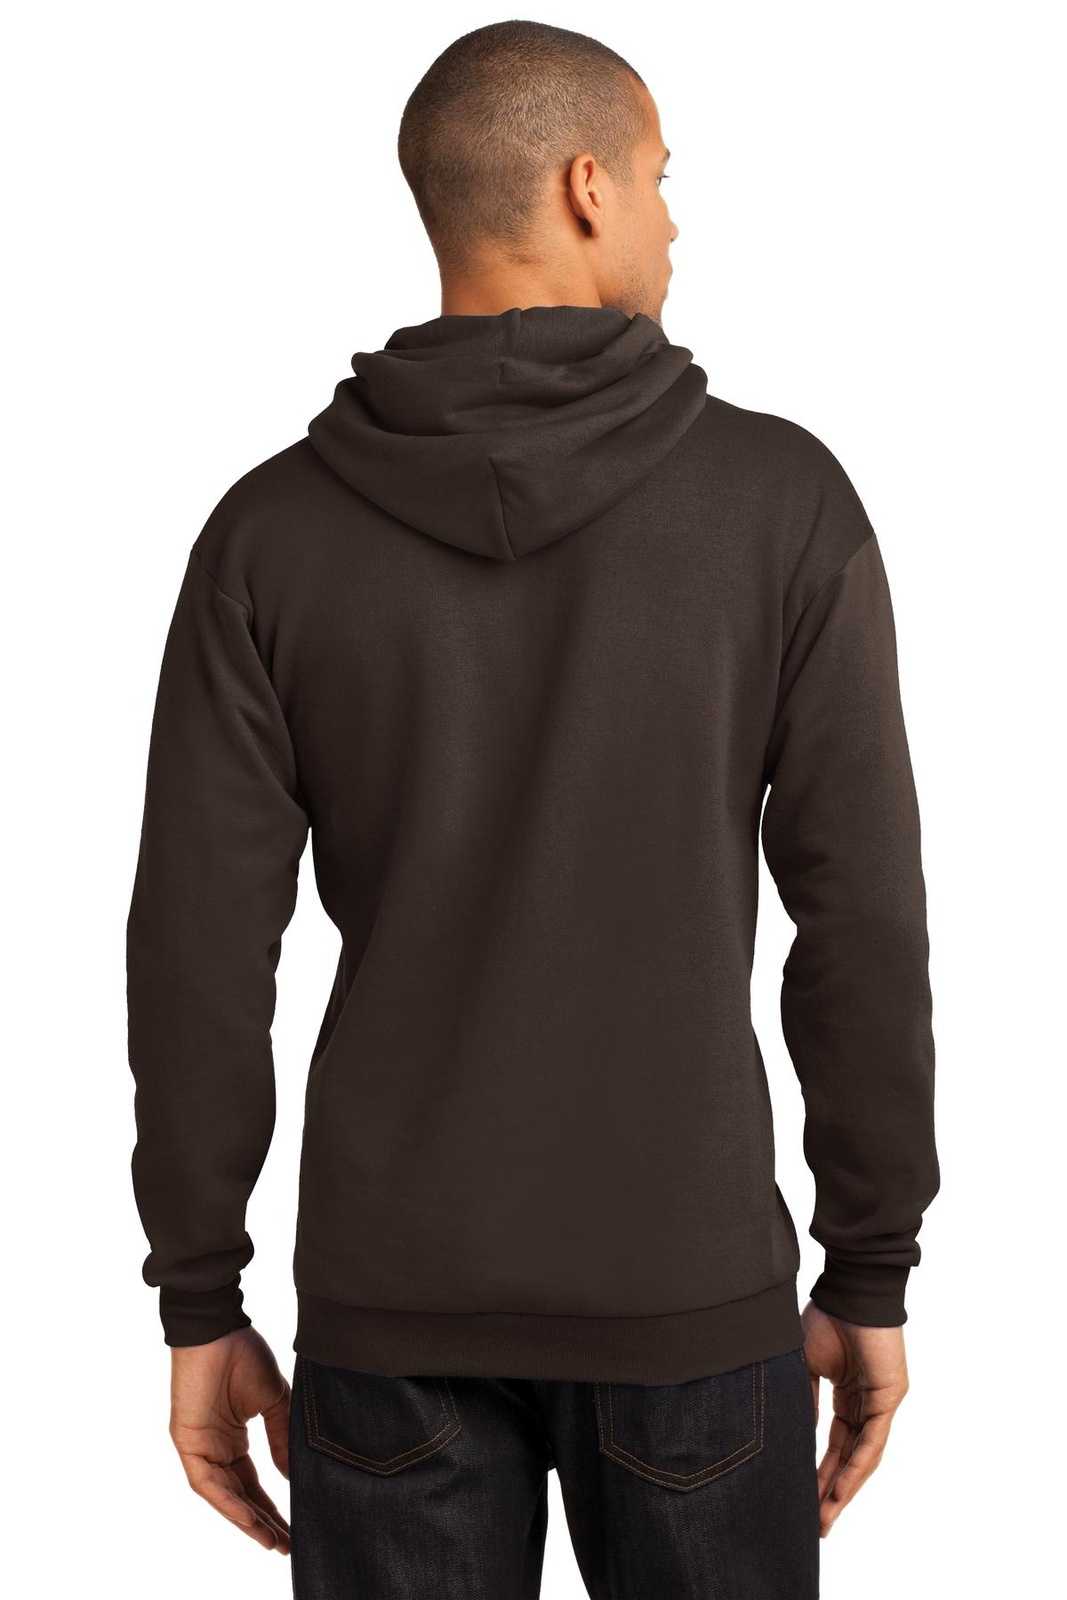 Port & Company PC78H Core Fleece Pullover Hooded Sweatshirt - Dark Chocolate Brown - HIT a Double - 1